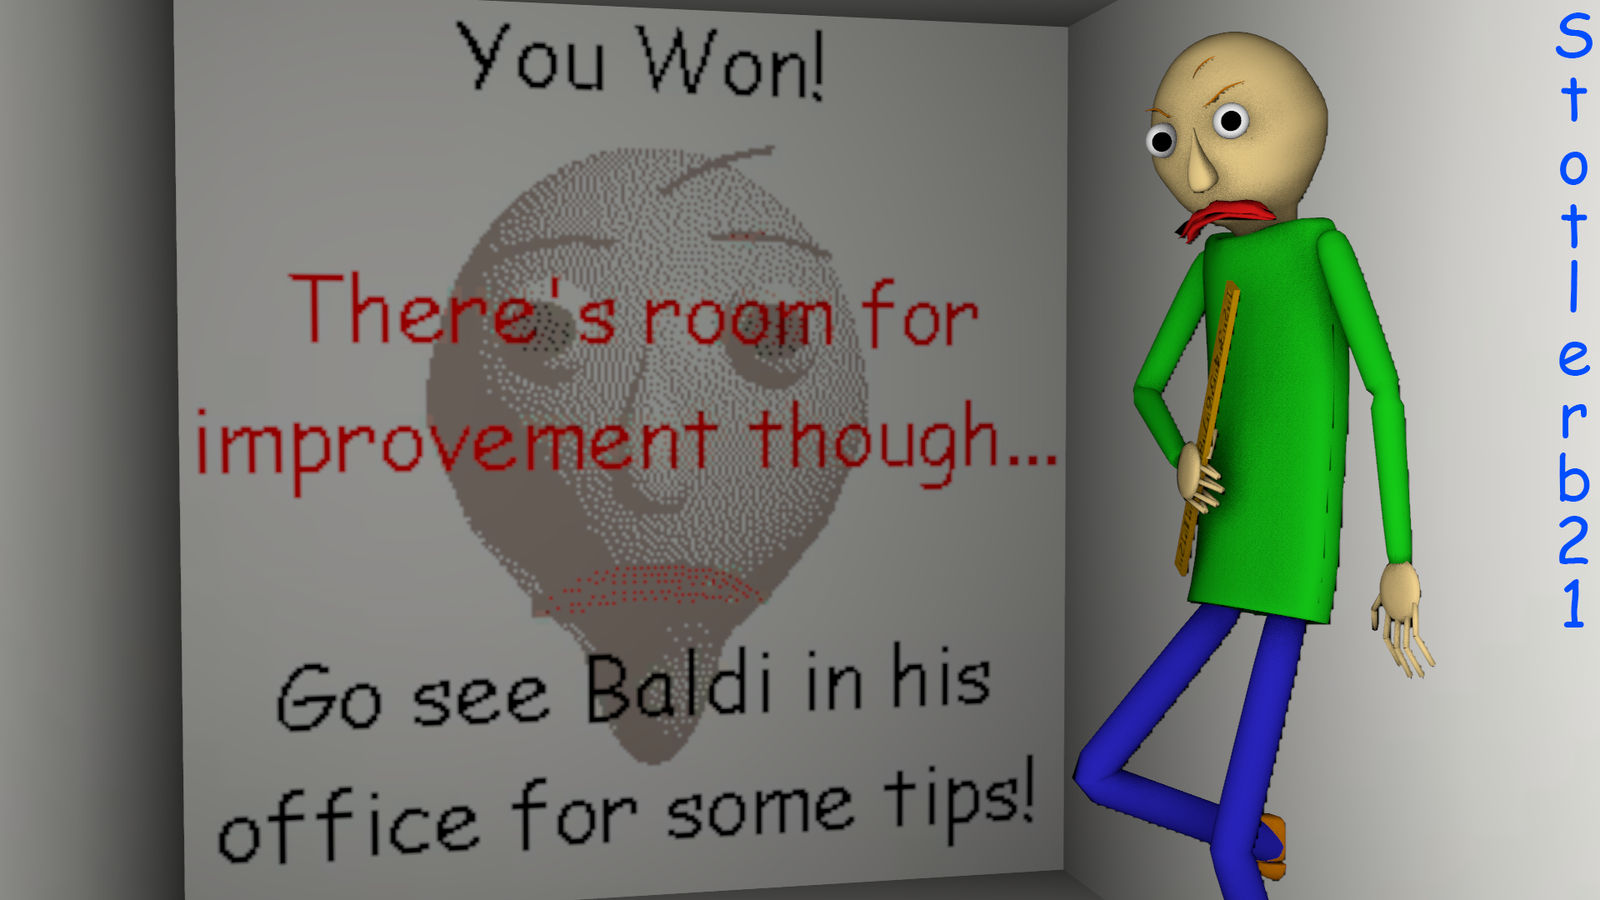 Baldi's Basics Plus - The Cutting Room Floor